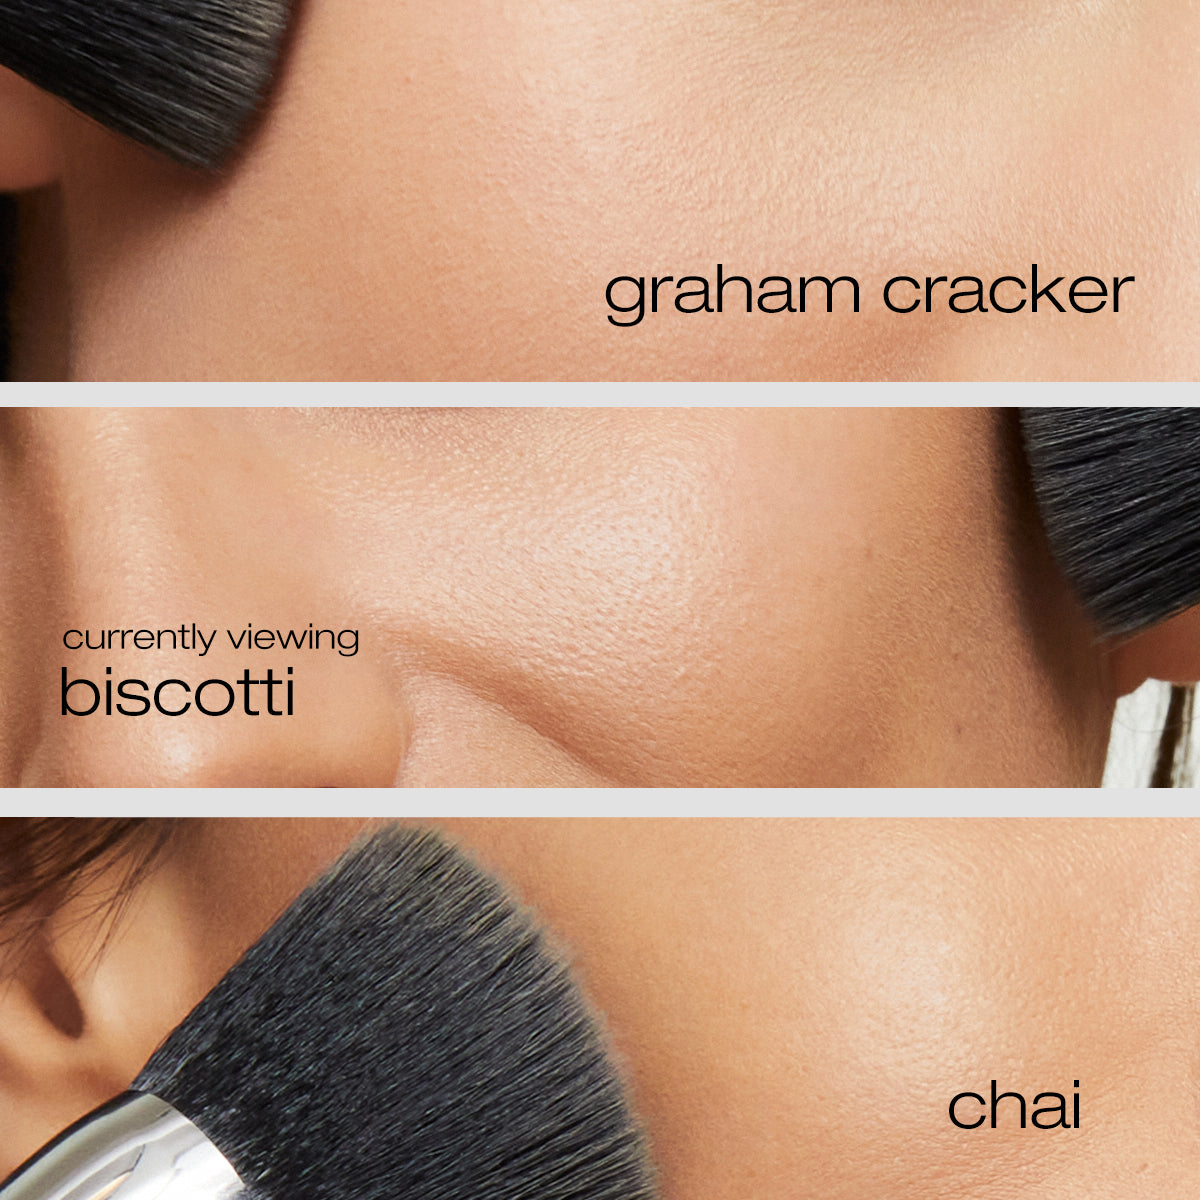 Model applying graham cracker, biscotti, and chai foundation on cheeks